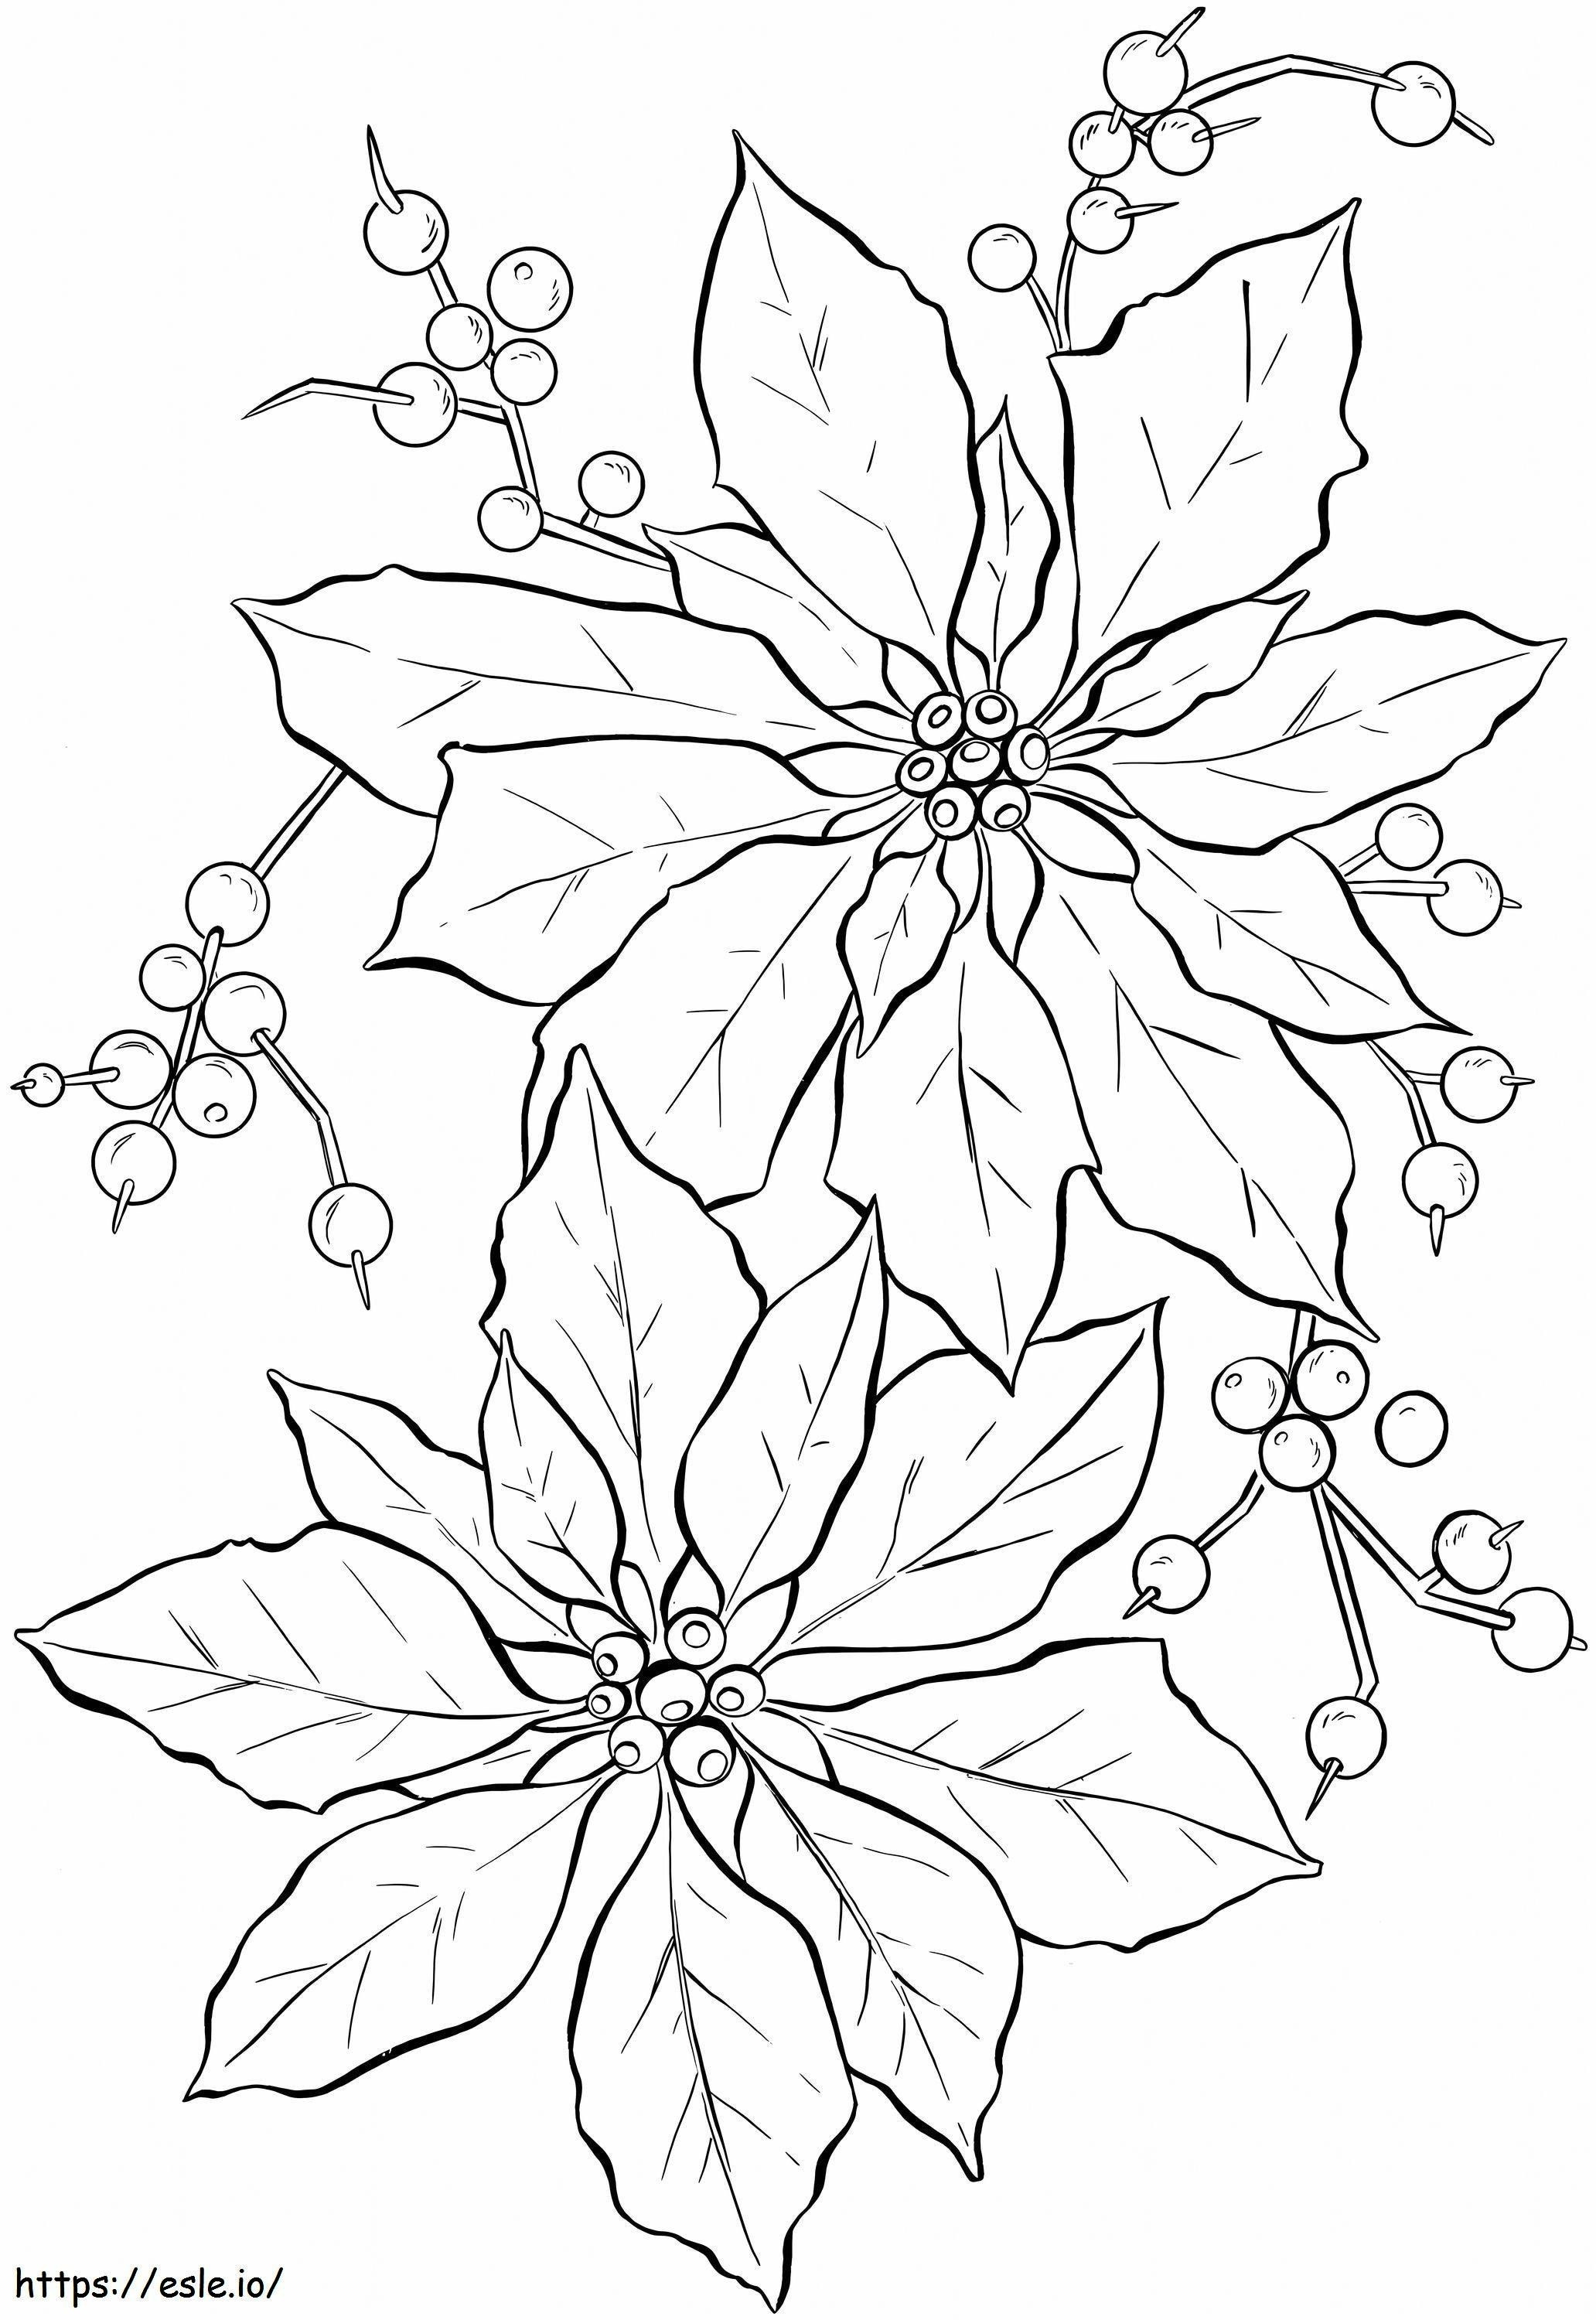 Coloriage Poinsettia Simple à imprimer dessin